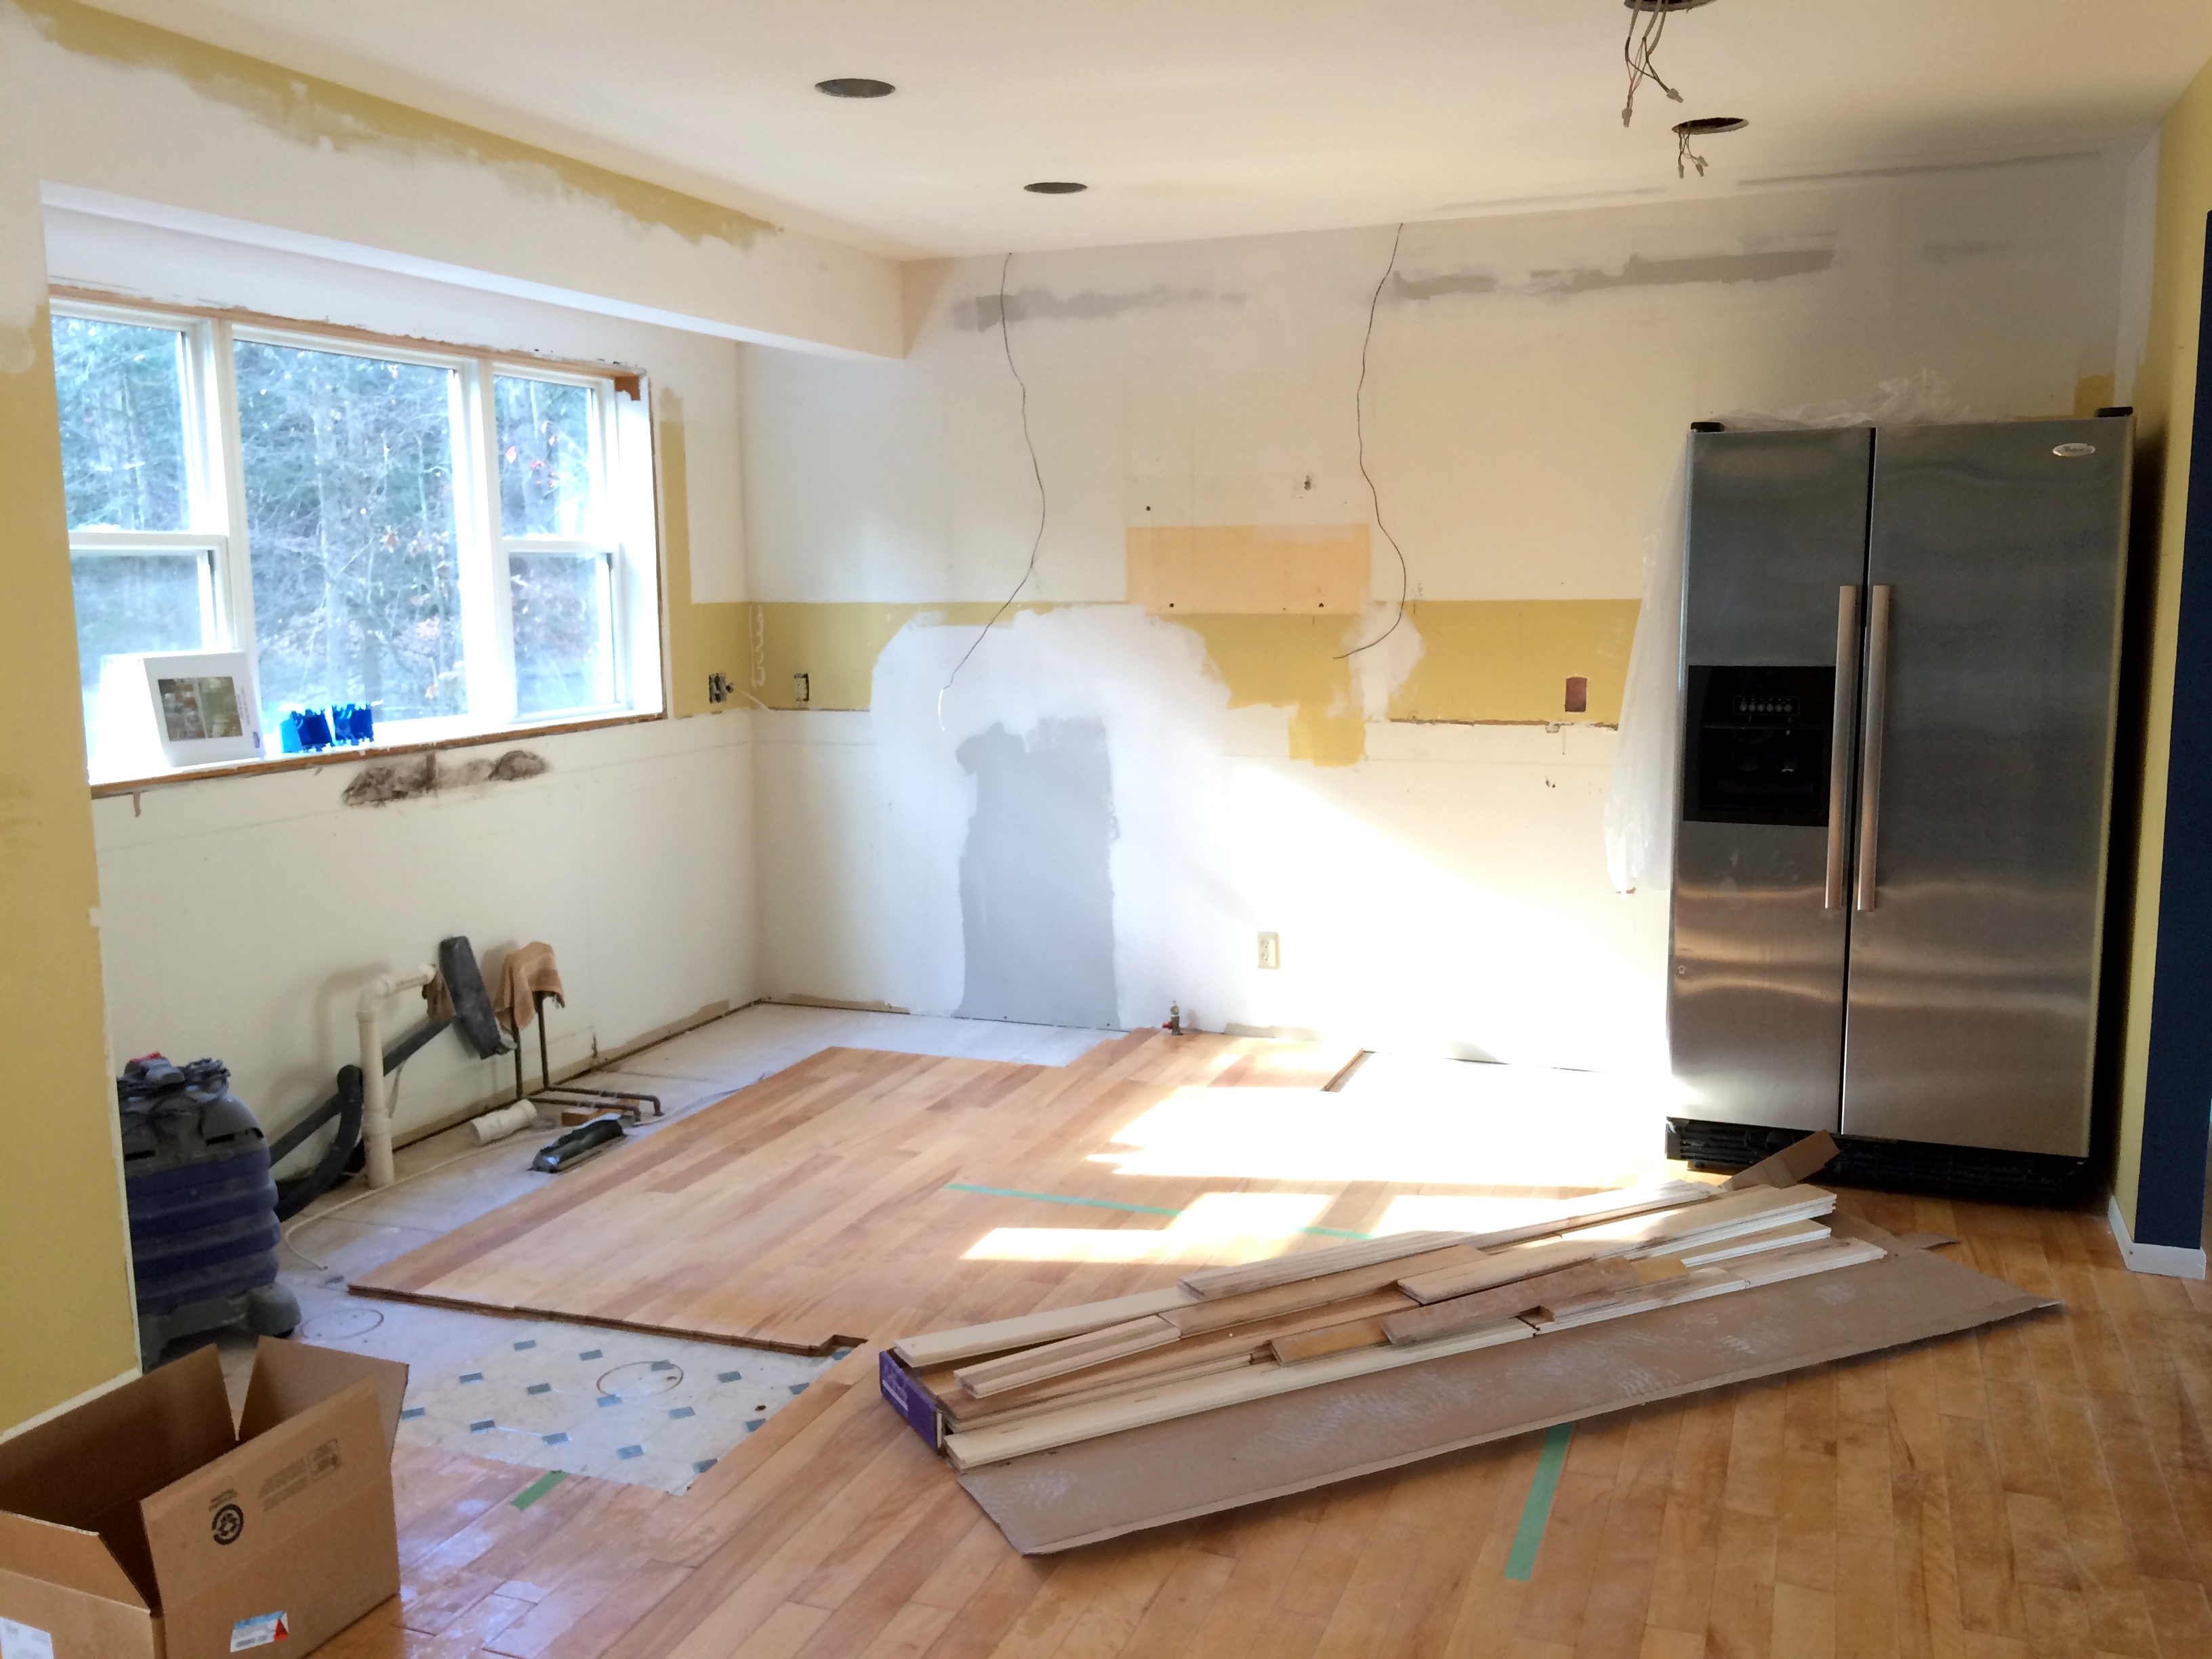 Staining Hardwood Floors, Installing Hardwood Floors In Existing Kitchen